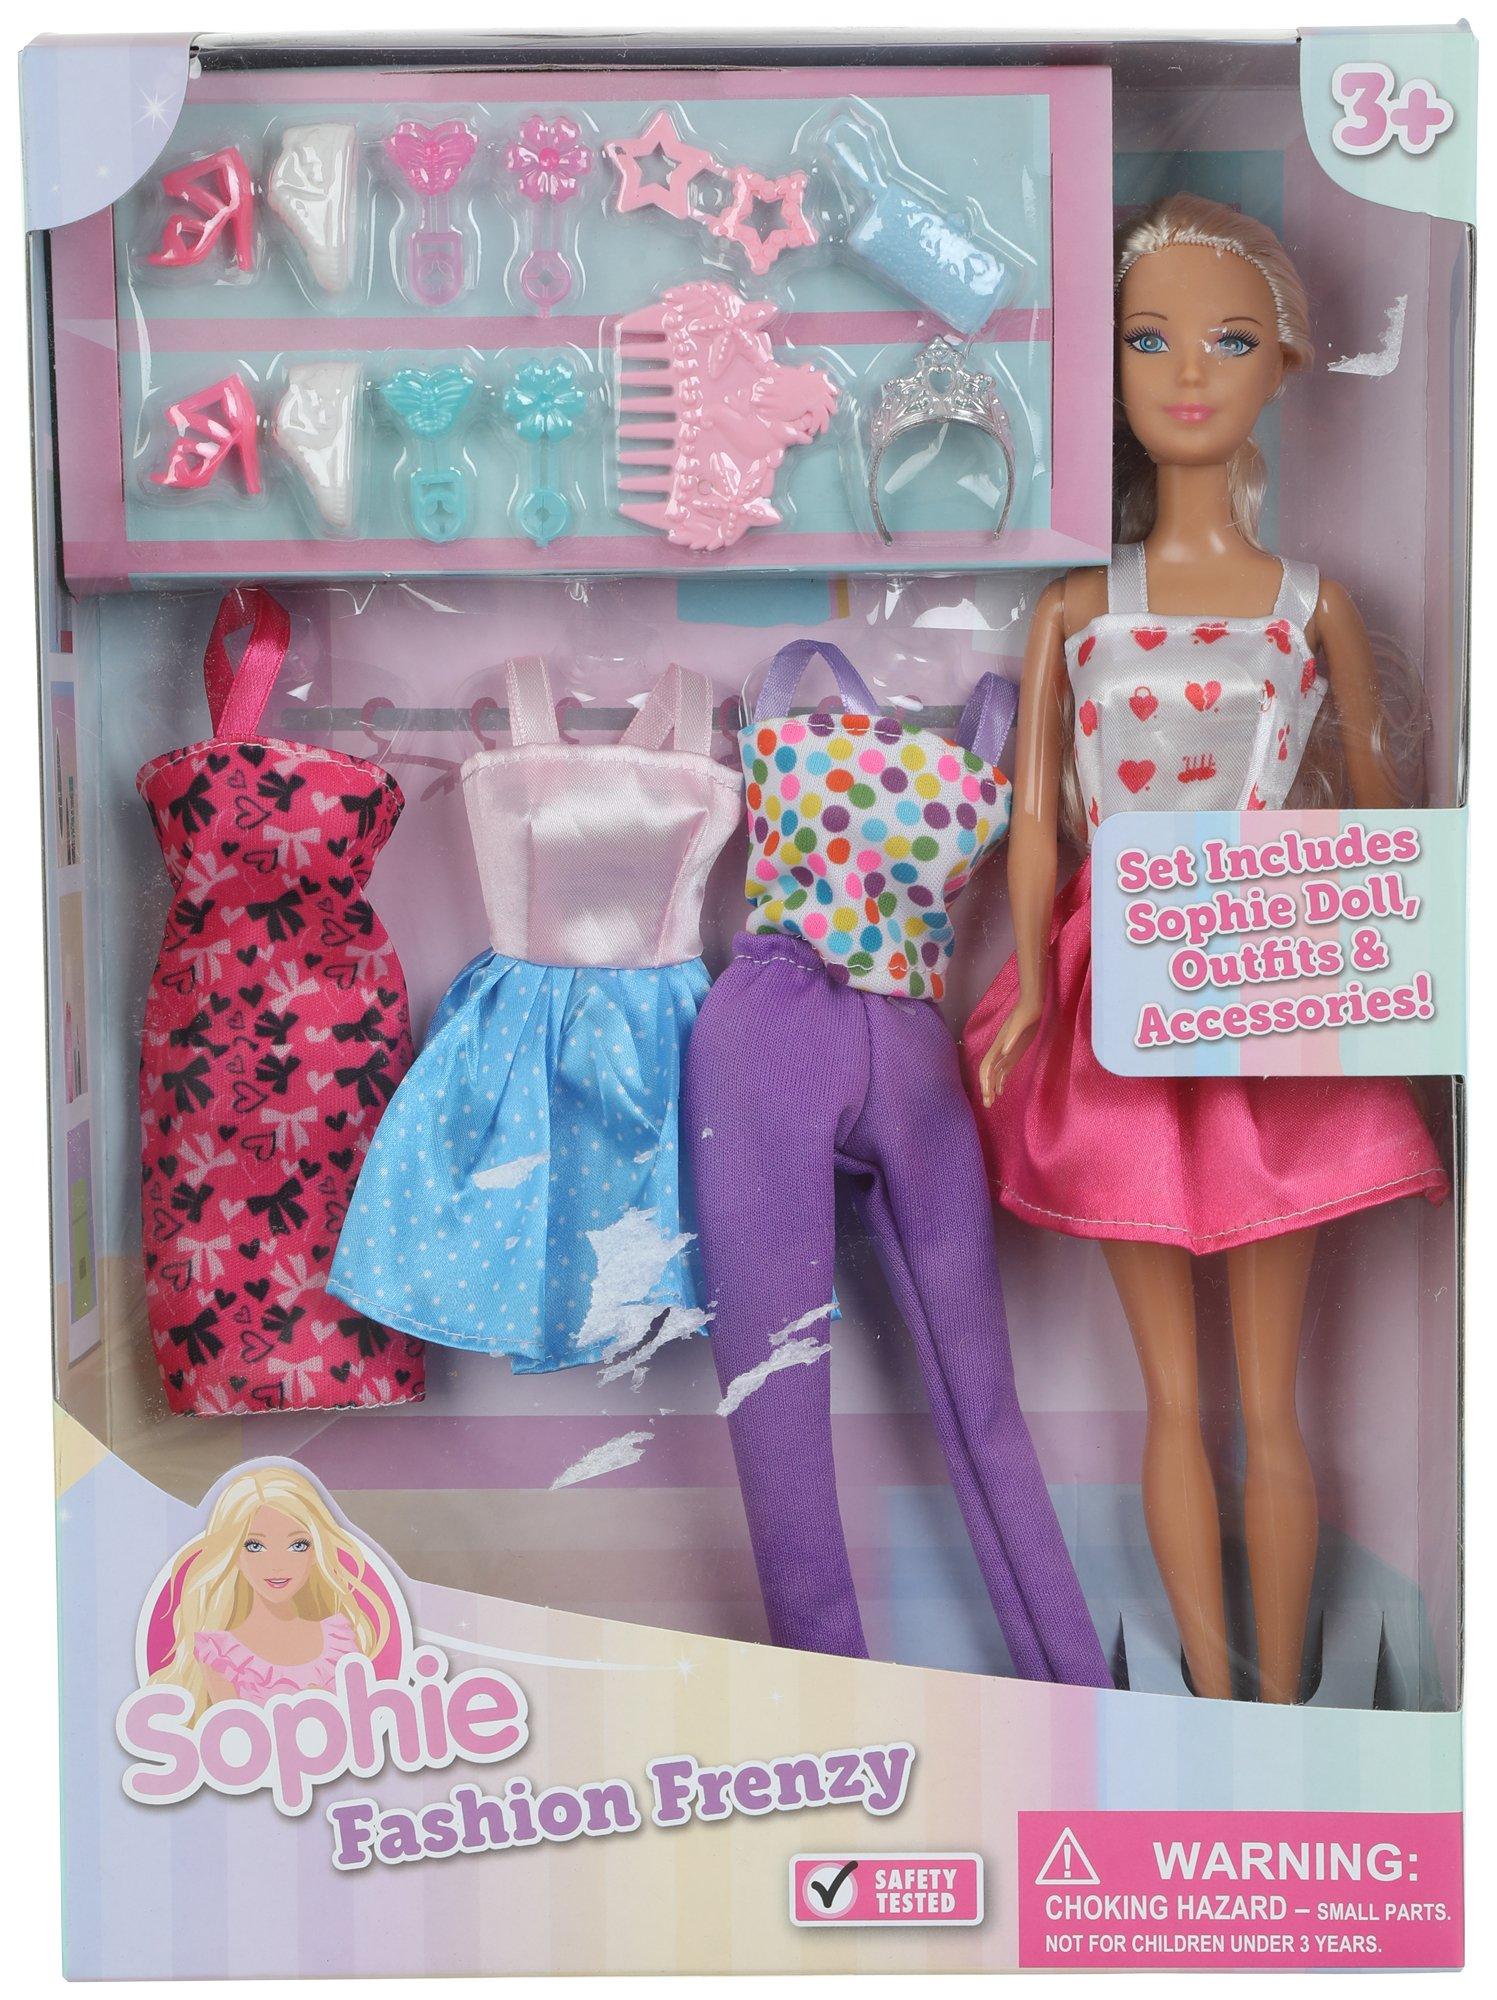 https://images.bealls.com/i/burkesoutlet/384-5517-1073-00-yyy/*Kids-Sophie-Fashion-Frenzy-Doll-Set*?$BR_thumbnail$&fmt=auto&qlt=default